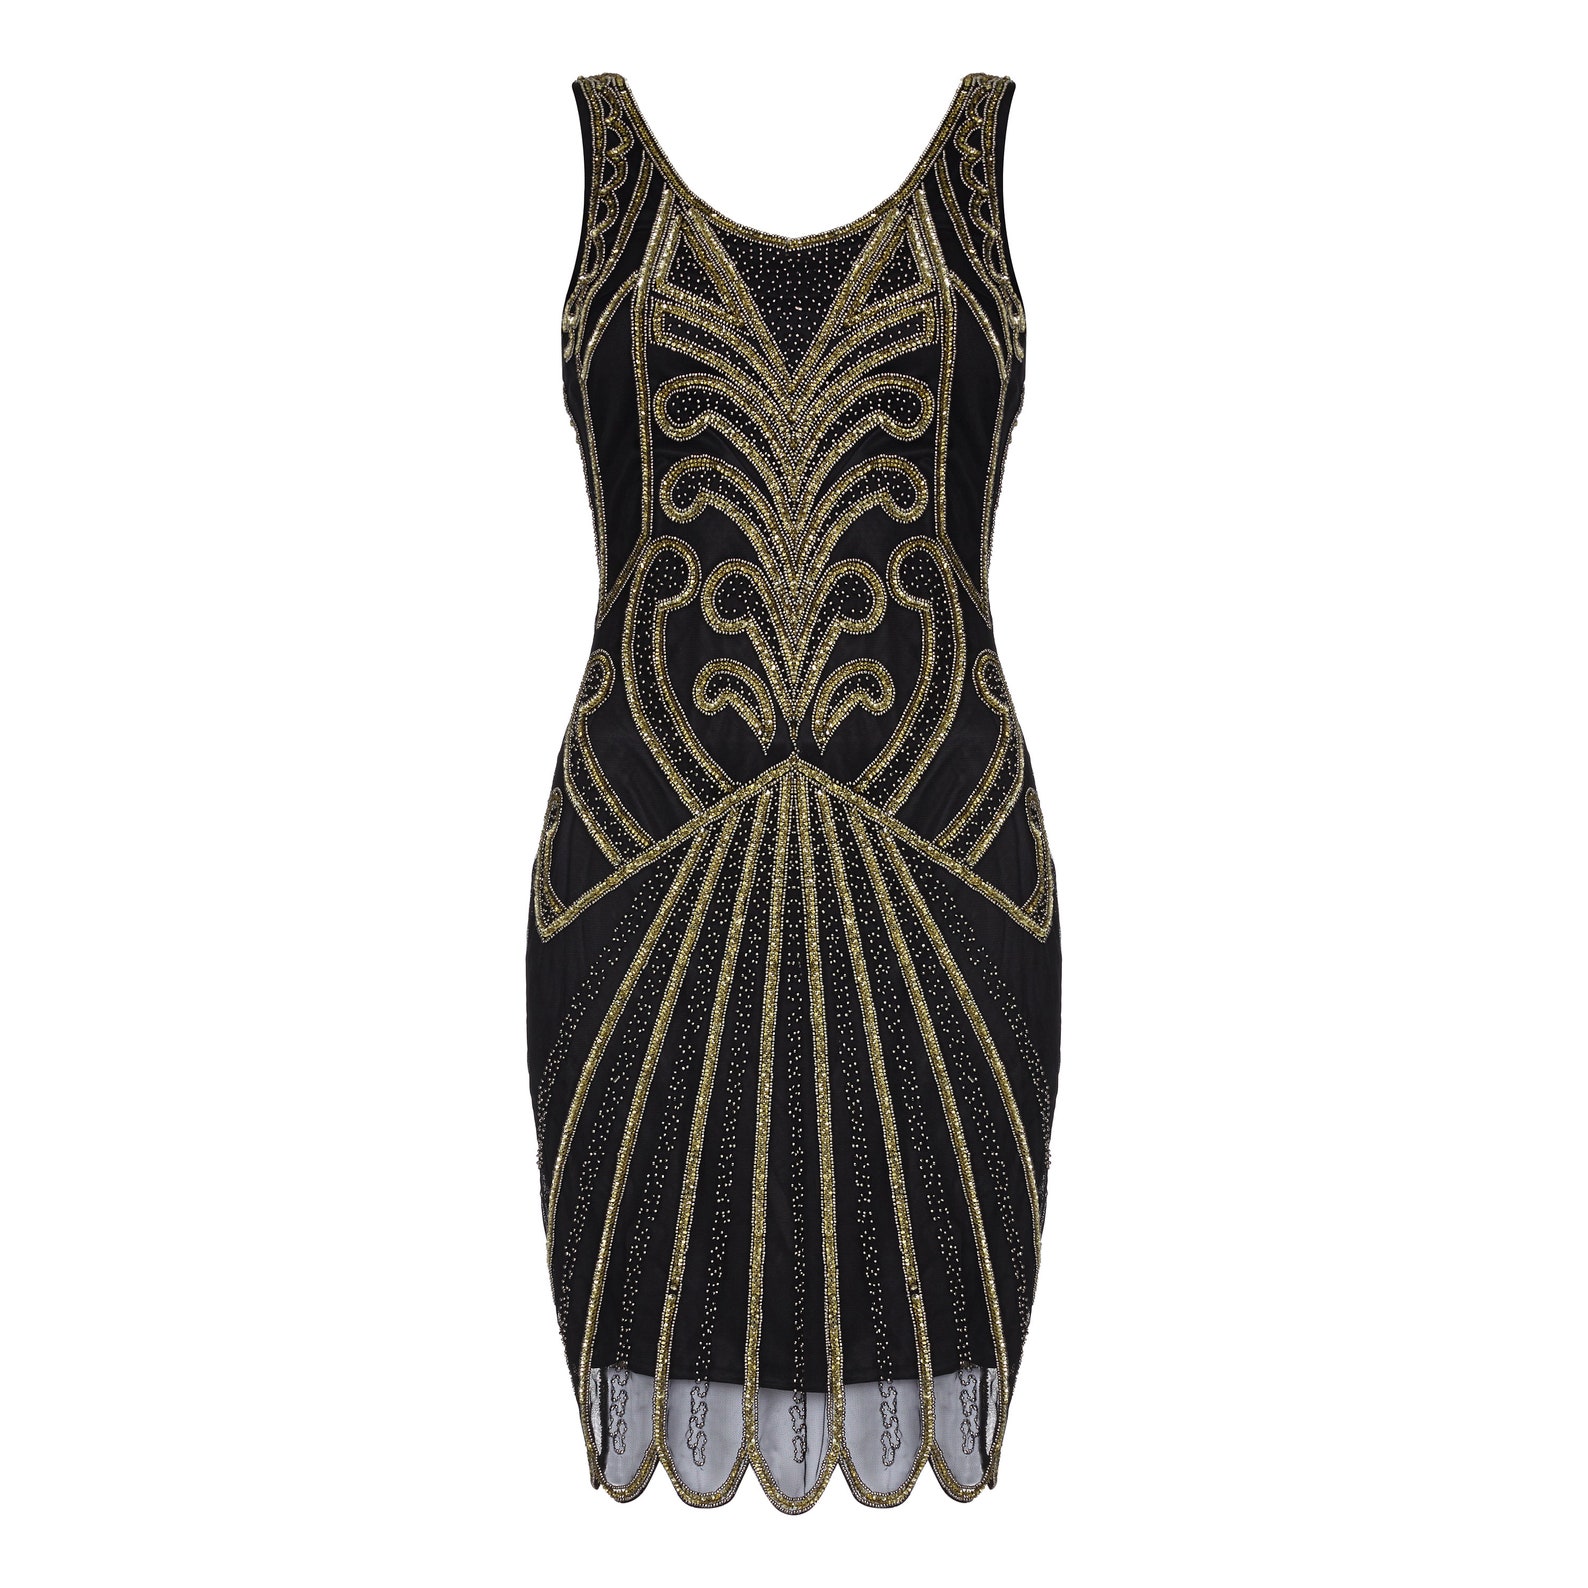 Francesca Flapper Dress in Black Gold 1920s Inspired Great - Etsy